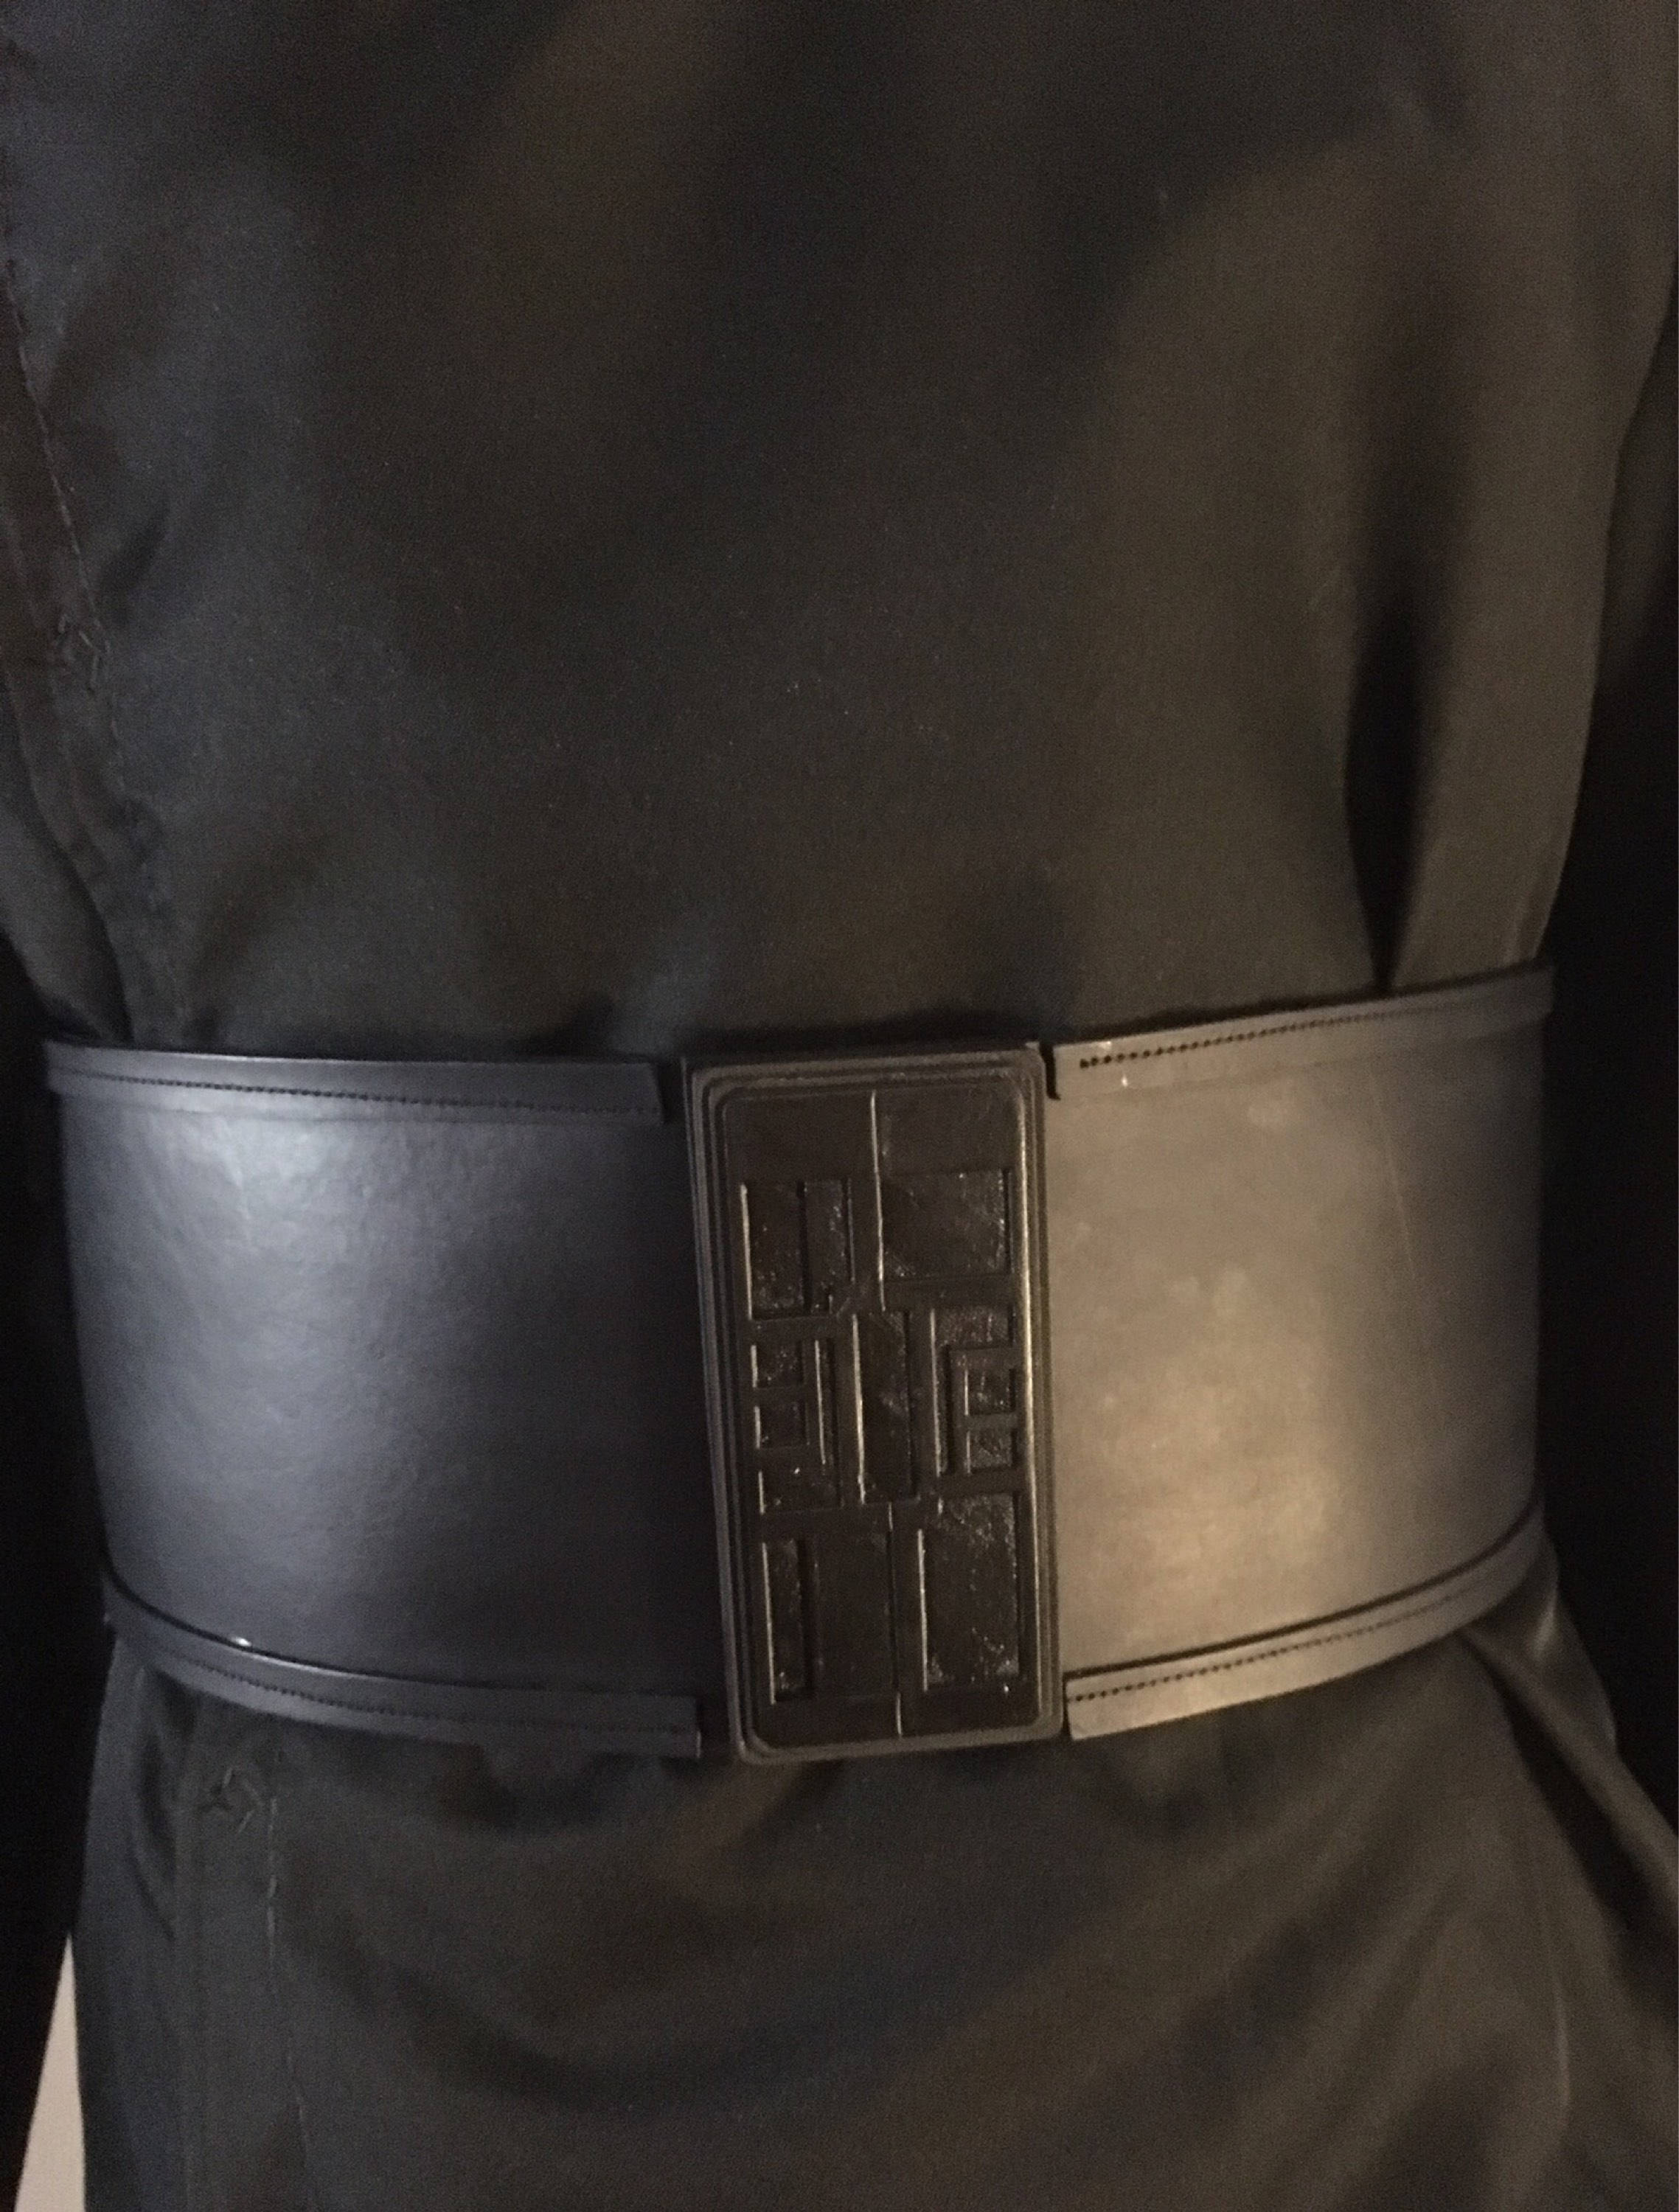 Star Wars The Force Awakens Kylo Ren Costume Belt